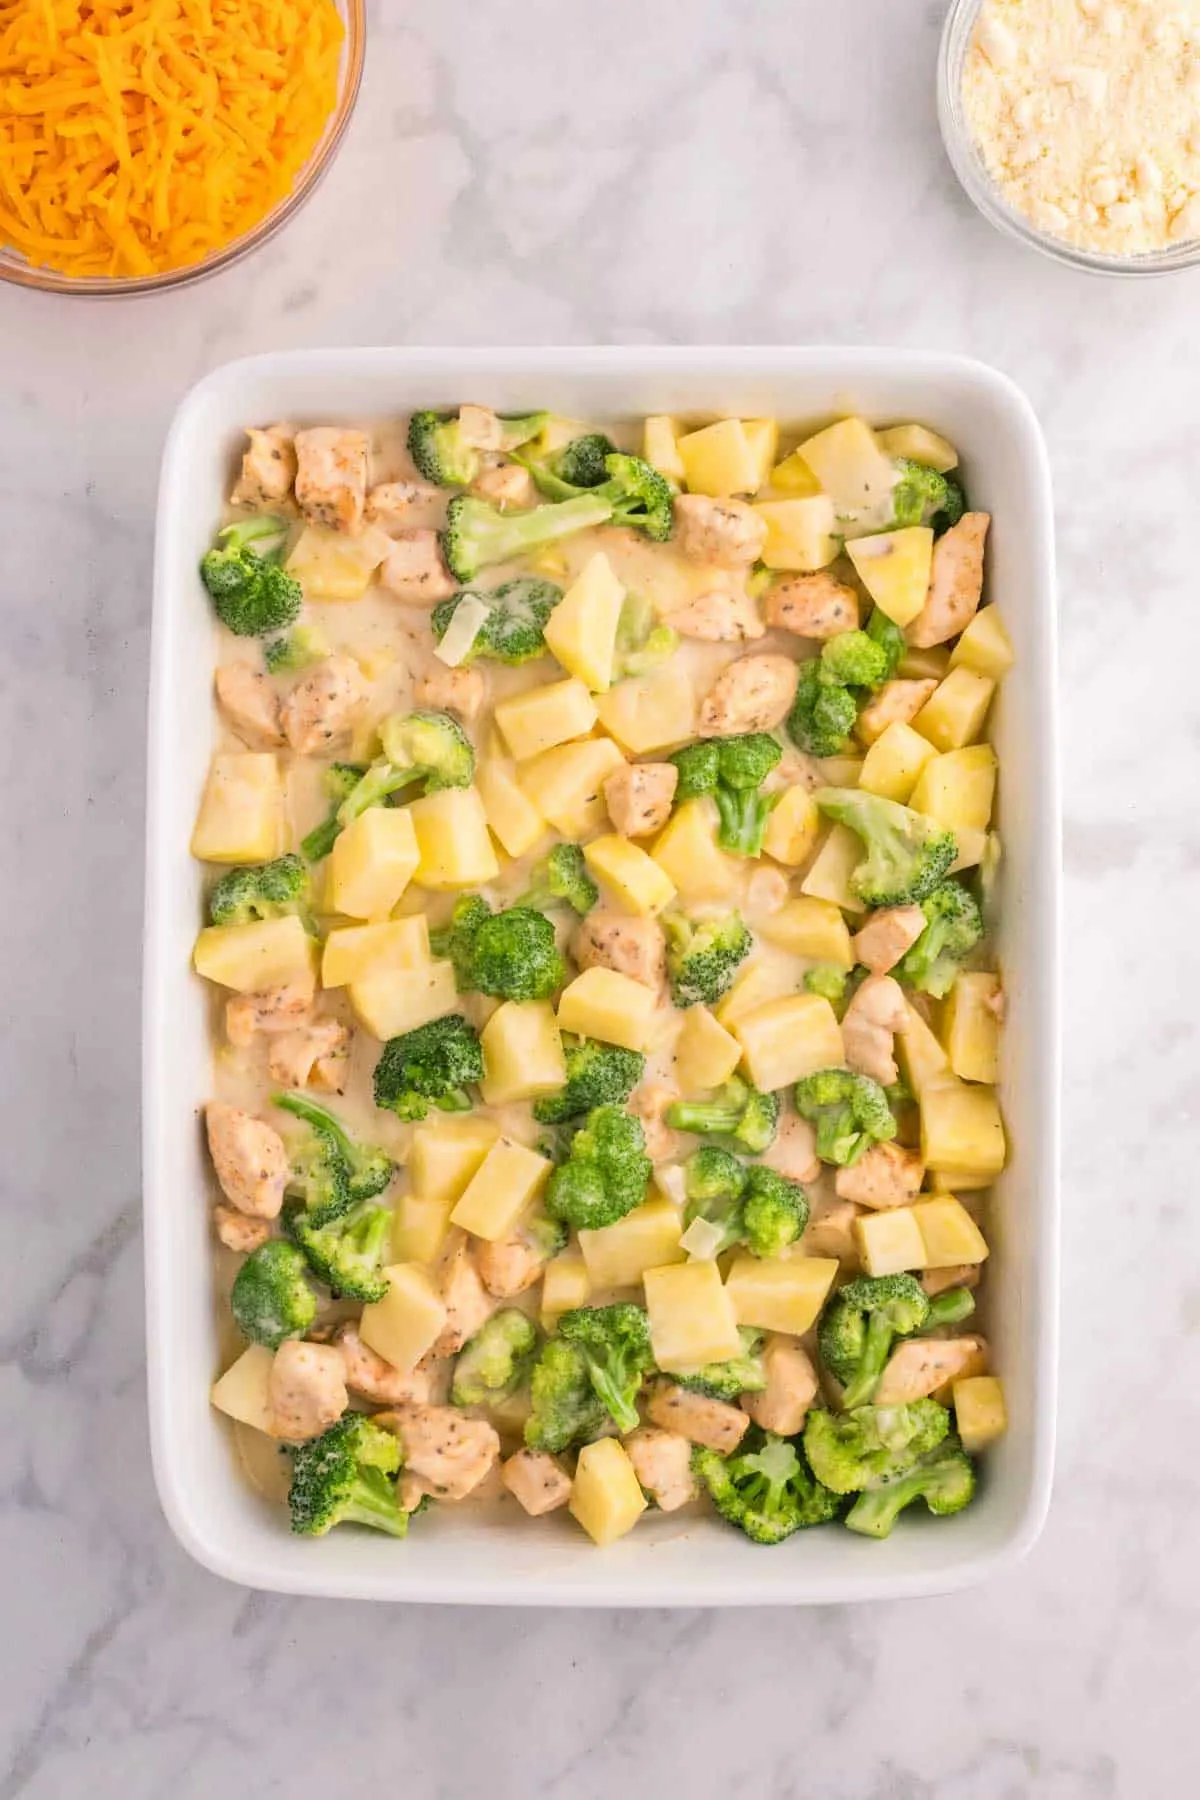 creamy chicken, broccoli and potato mixture in a baking dish